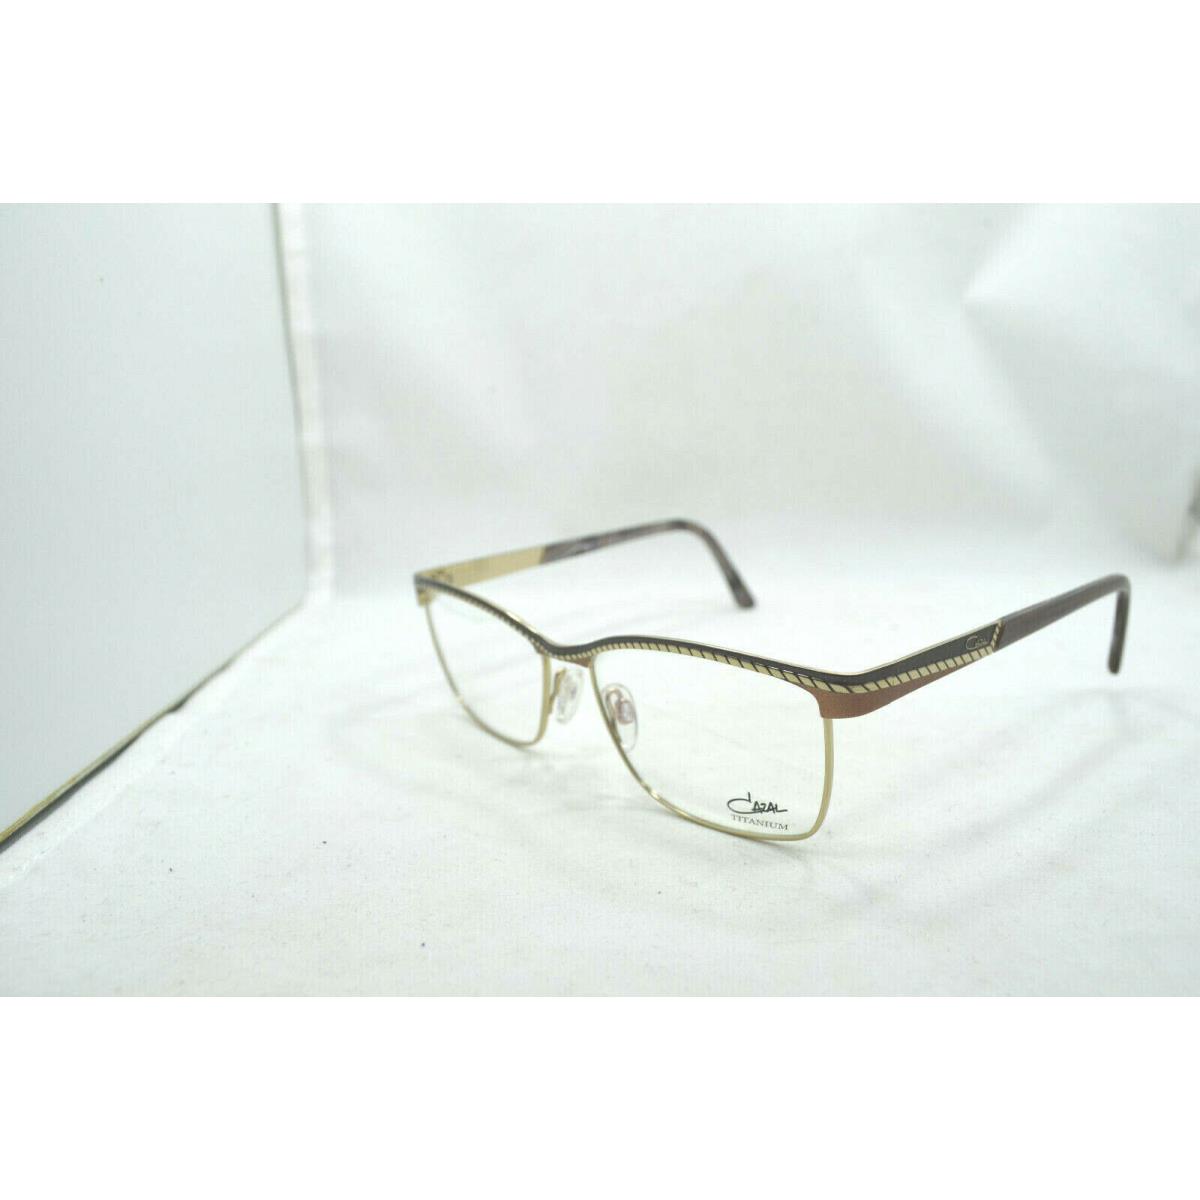 Cazal 4246 002 Eyeglasses Frame